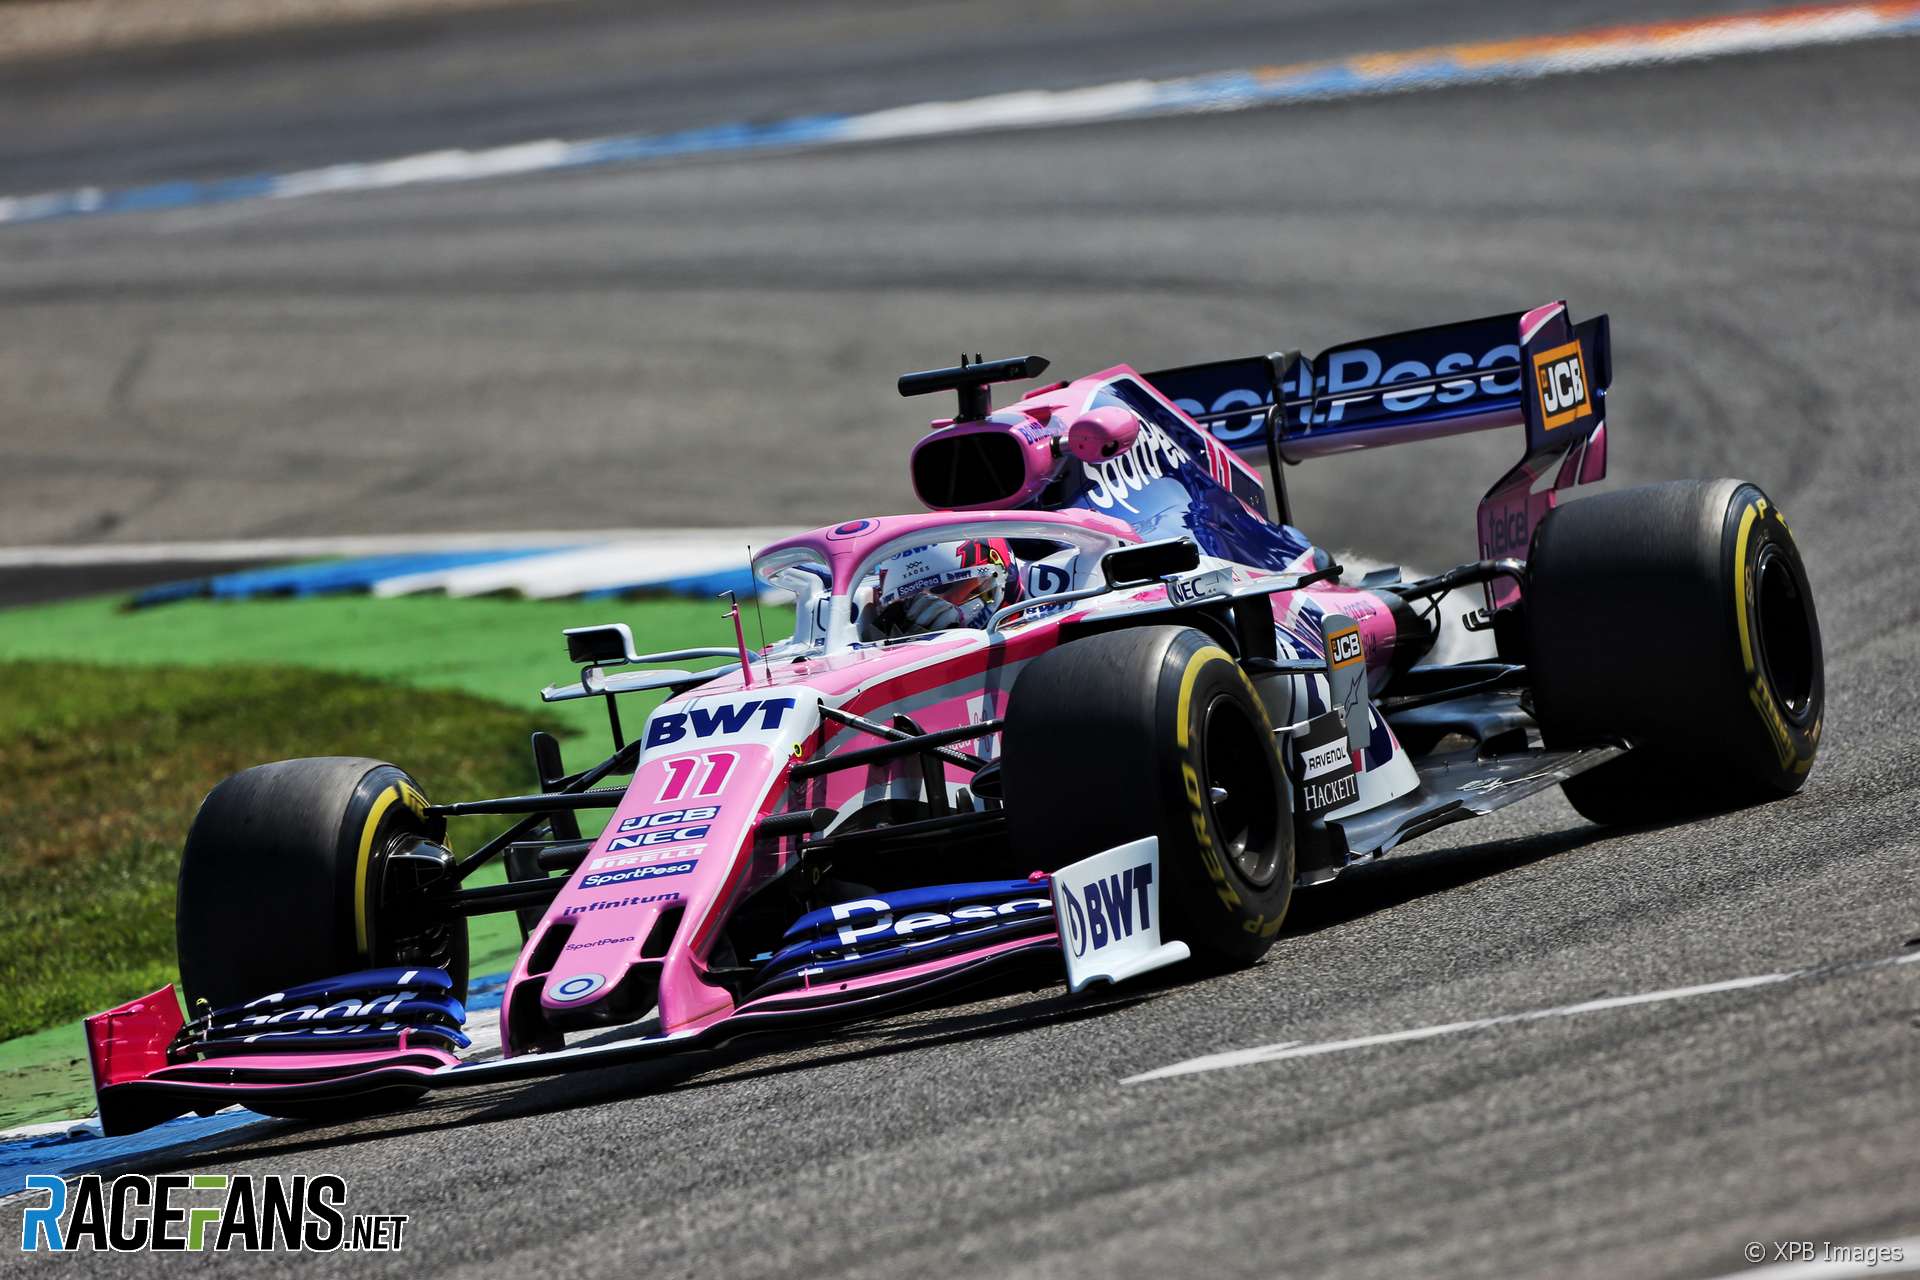 Wallpaper German Grand Prix of 2019. Marco's Formula 1 Page